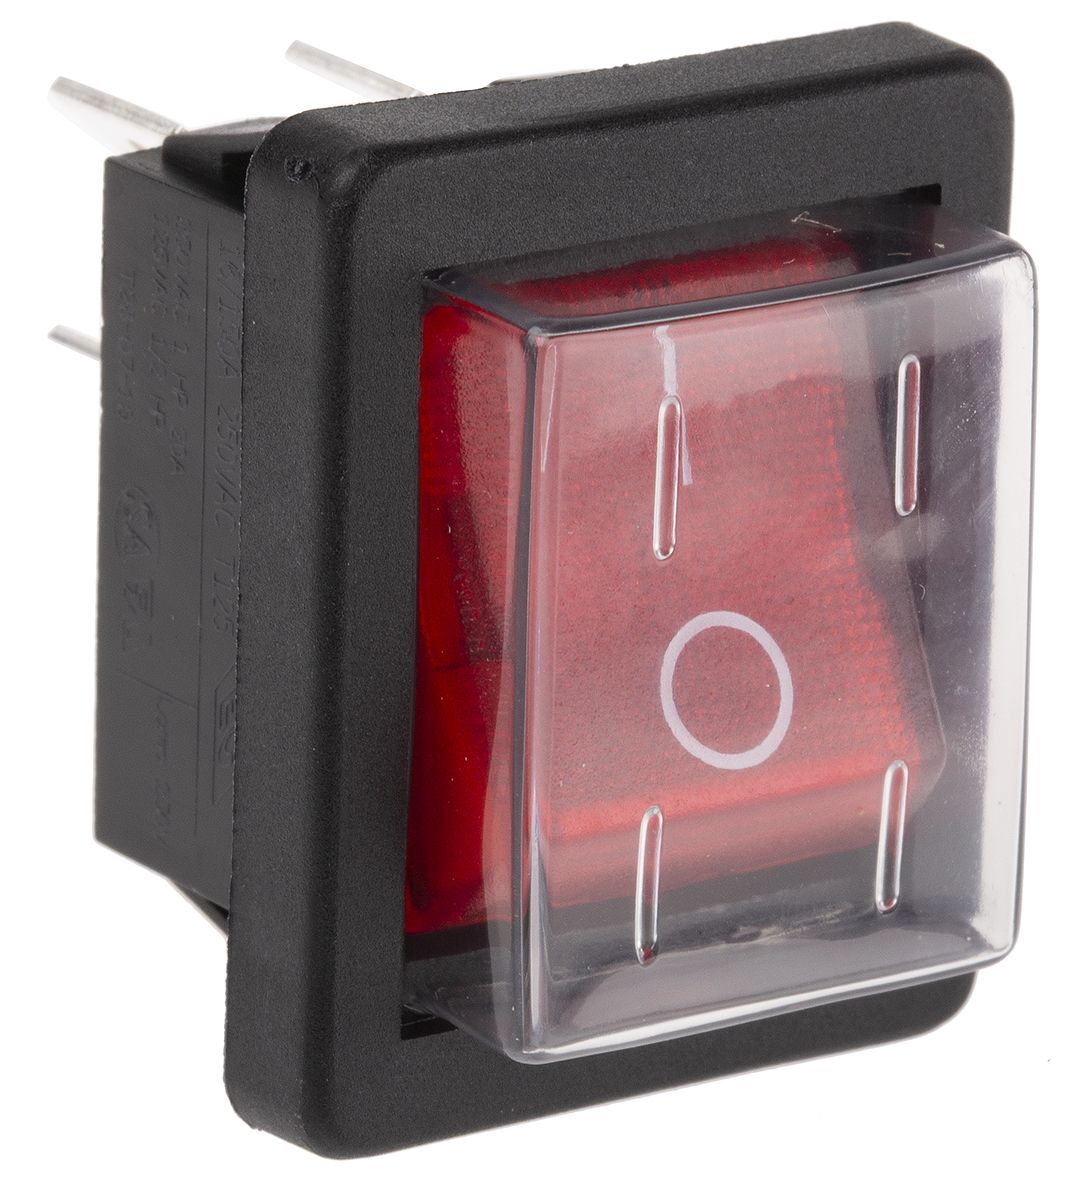 Kolébkový spínač osvětlený, barva ovladače: Červená Dvoupólový jednopolohový (DPST) Zap-vyp 16 A